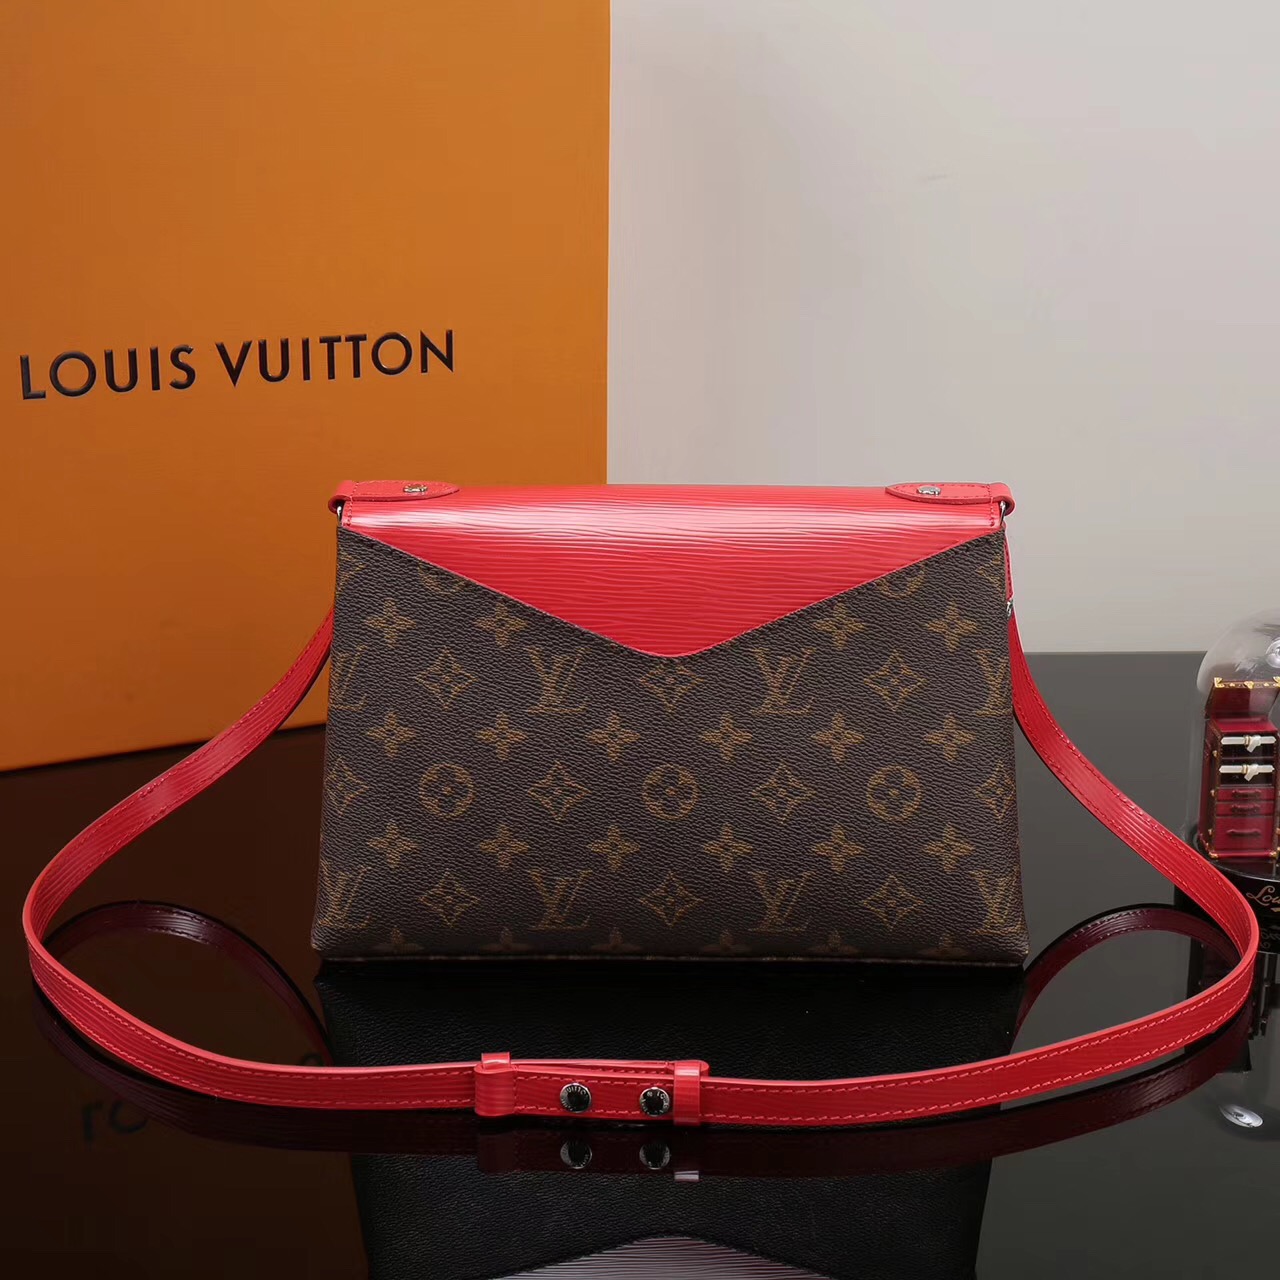 LV Louis Vuitton Monogram Saint Michel Epi bags M44031 Handbags Red [LV1056] - $339.00 : Luxury Shop